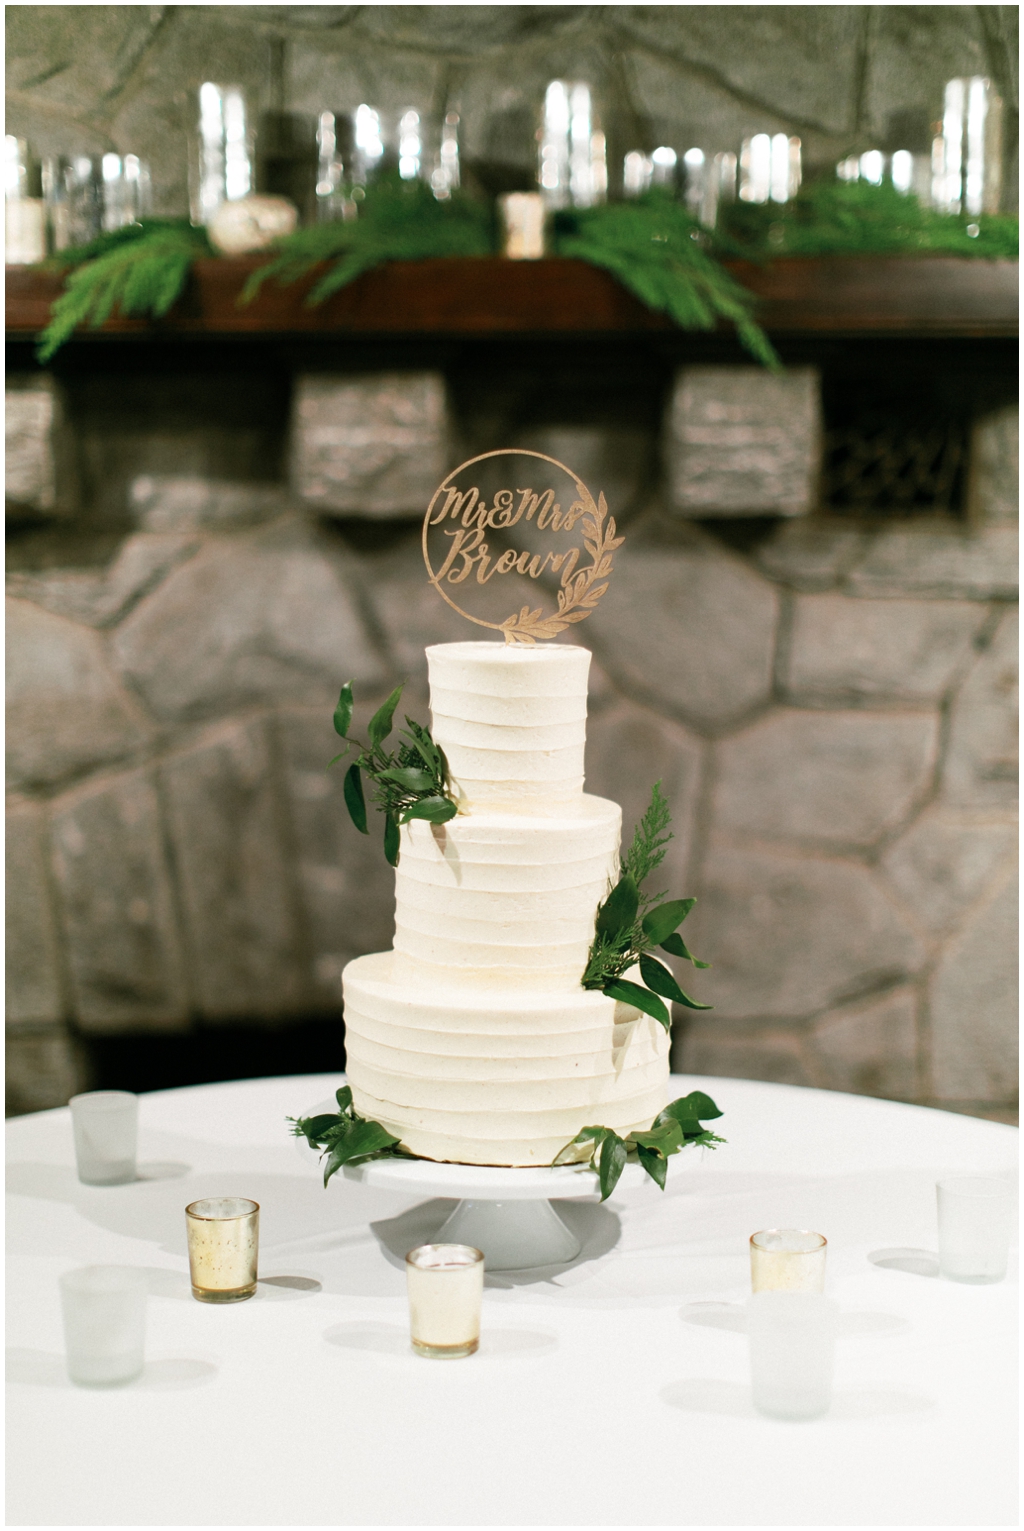 Simple elegant wedding cake